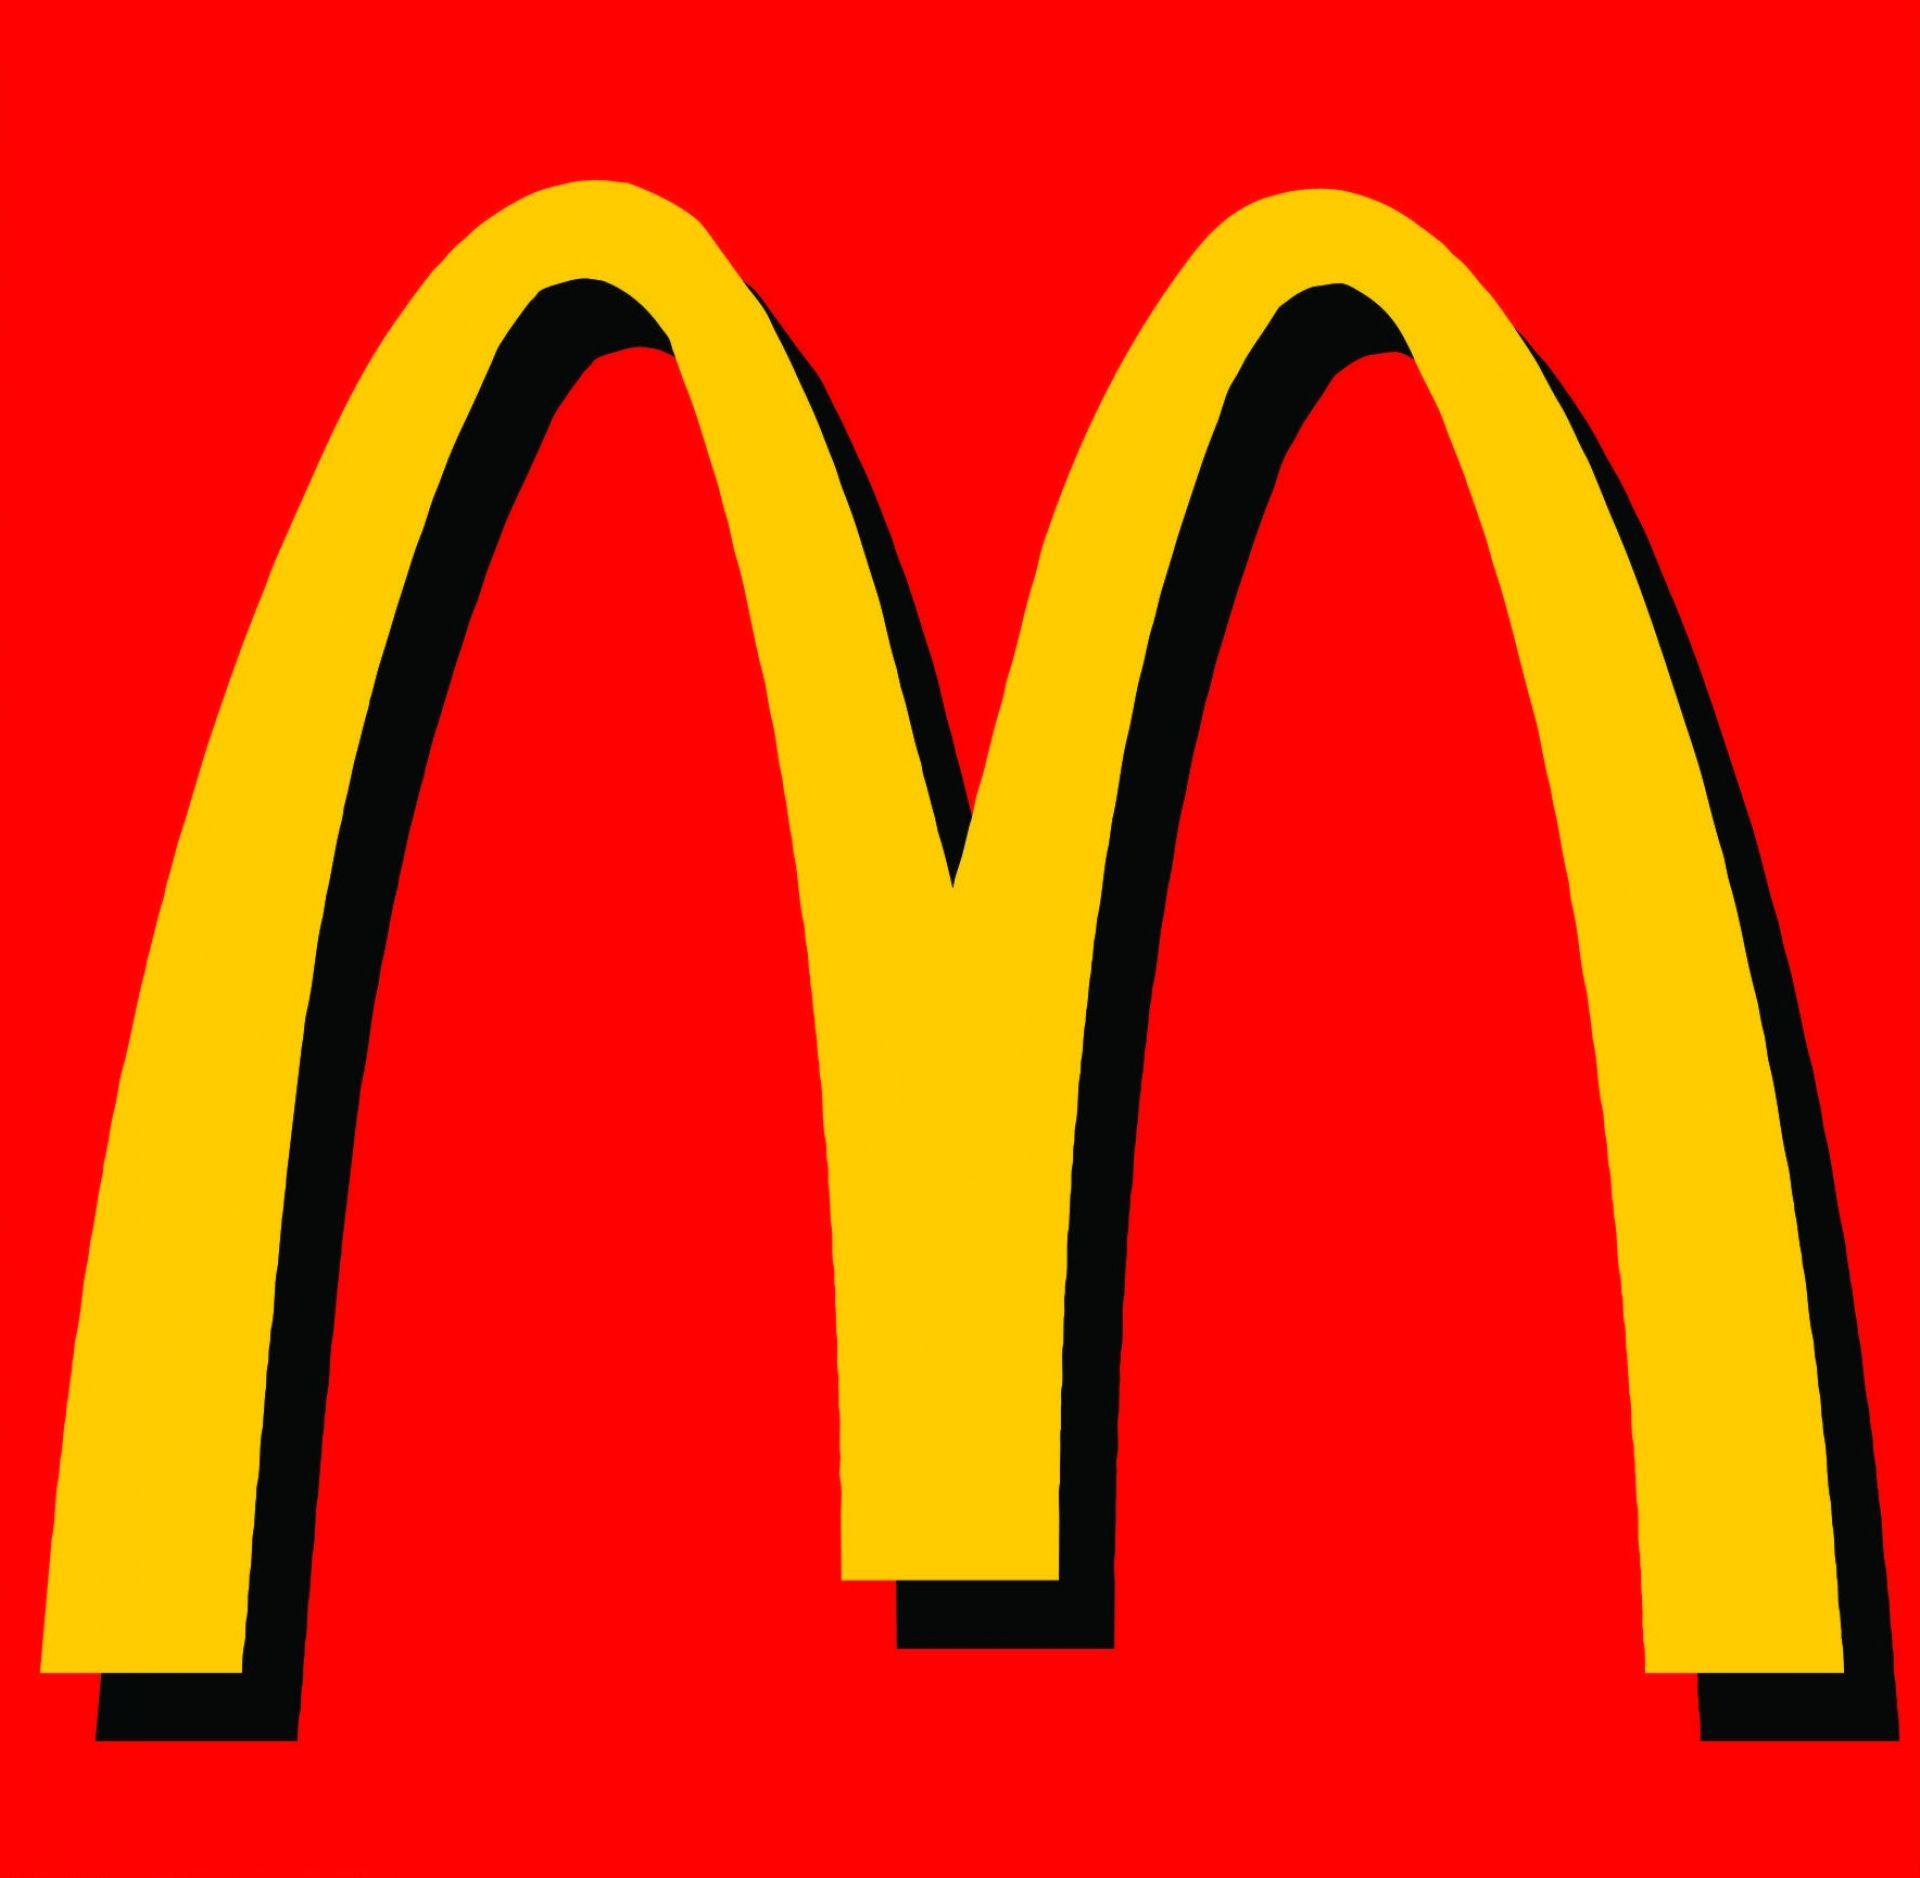 McDonald's Logo - Image - Plain-mcdonalds-logo.jpg | Logopedia | FANDOM powered by Wikia